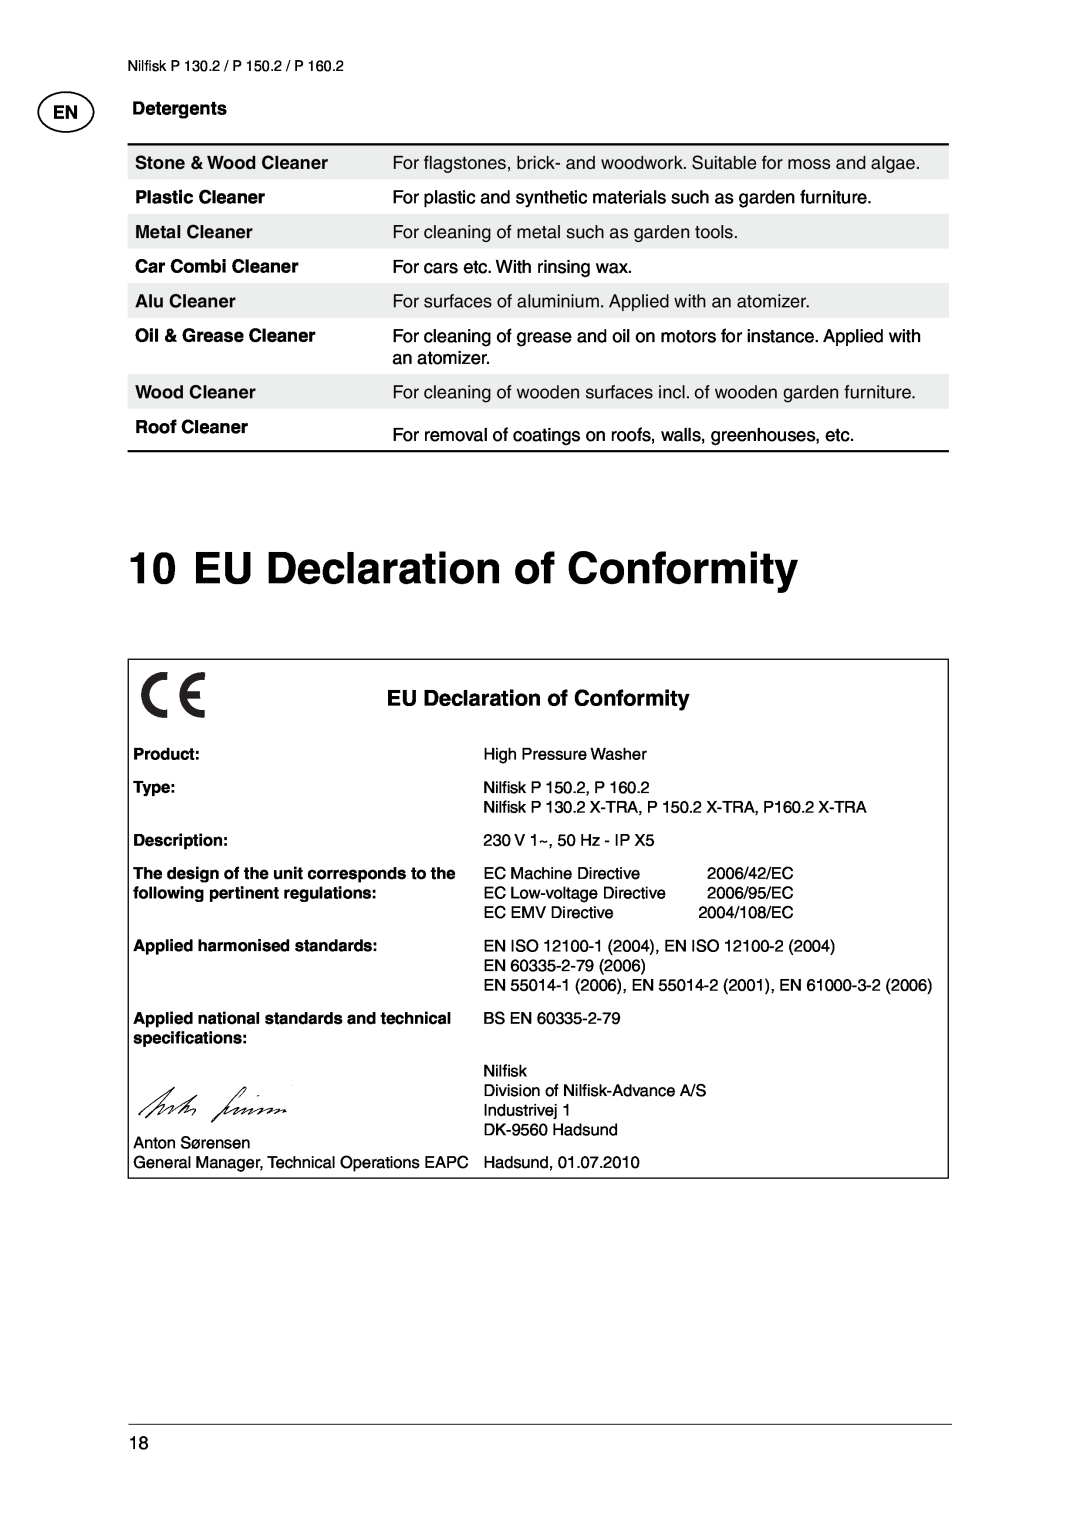 Nilfisk-Advance America P 130.2, P 160.2 EU Declaration of Conformity, Detergents, Stone & Wood Cleaner, Plastic Cleaner 